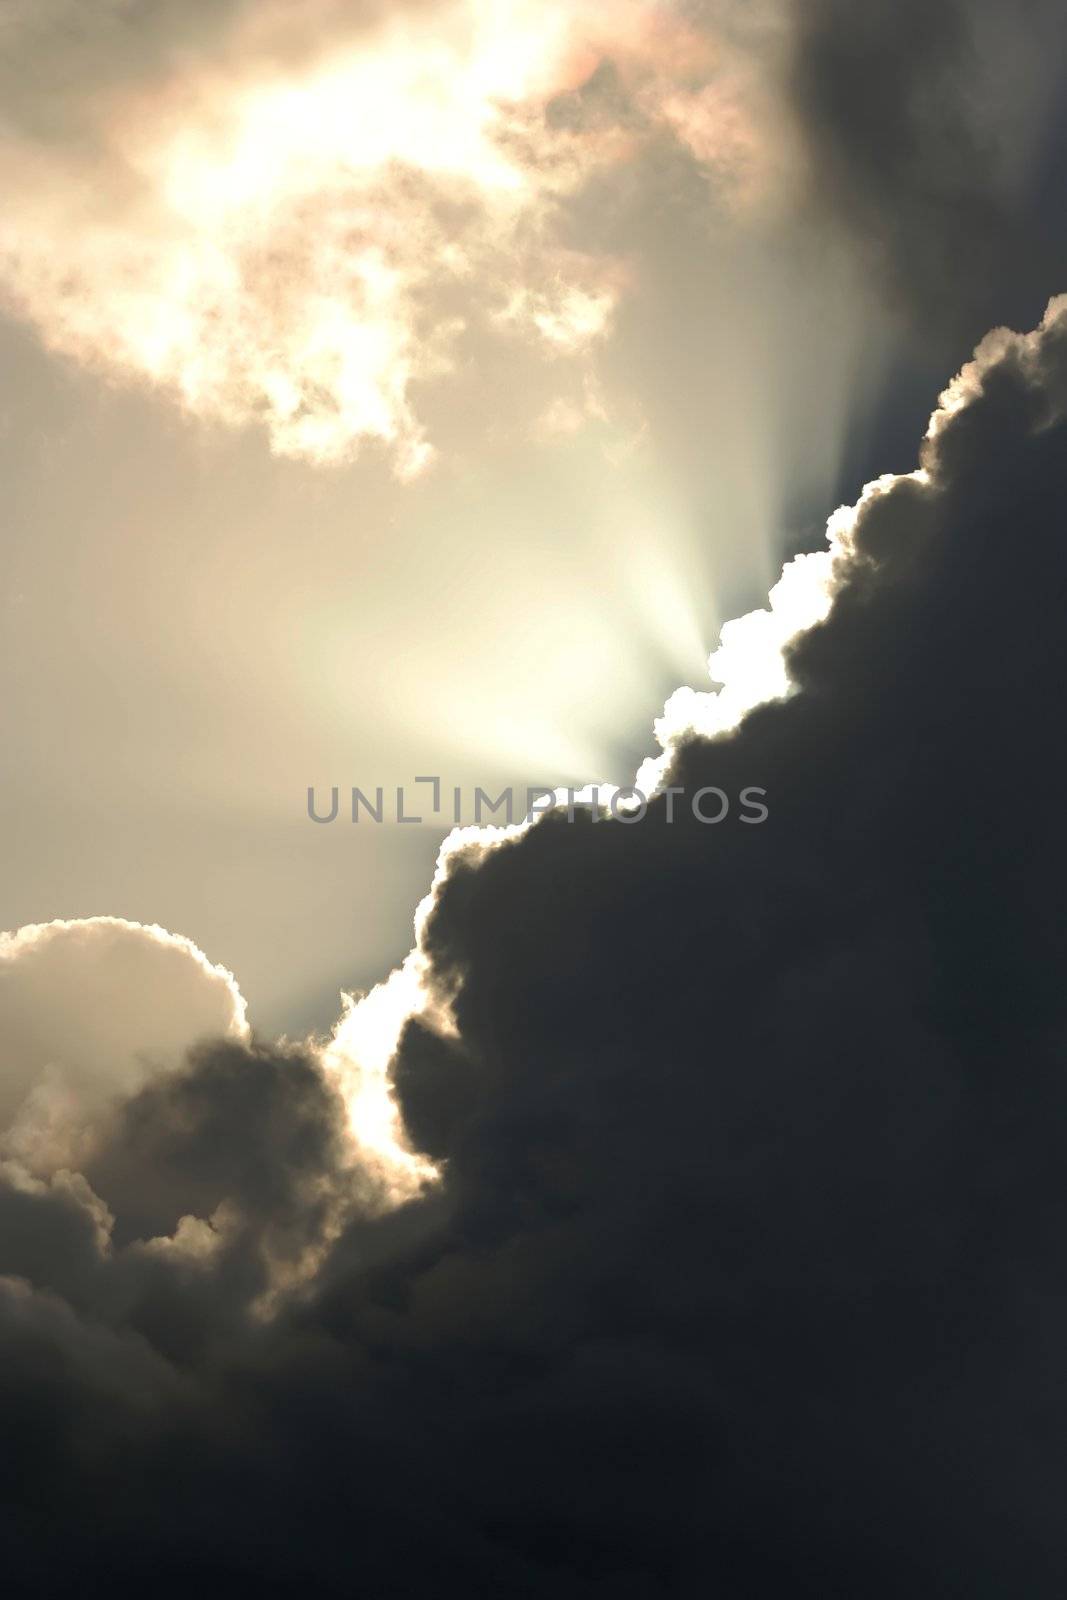 Suns Rays behind cloud by fouroaks